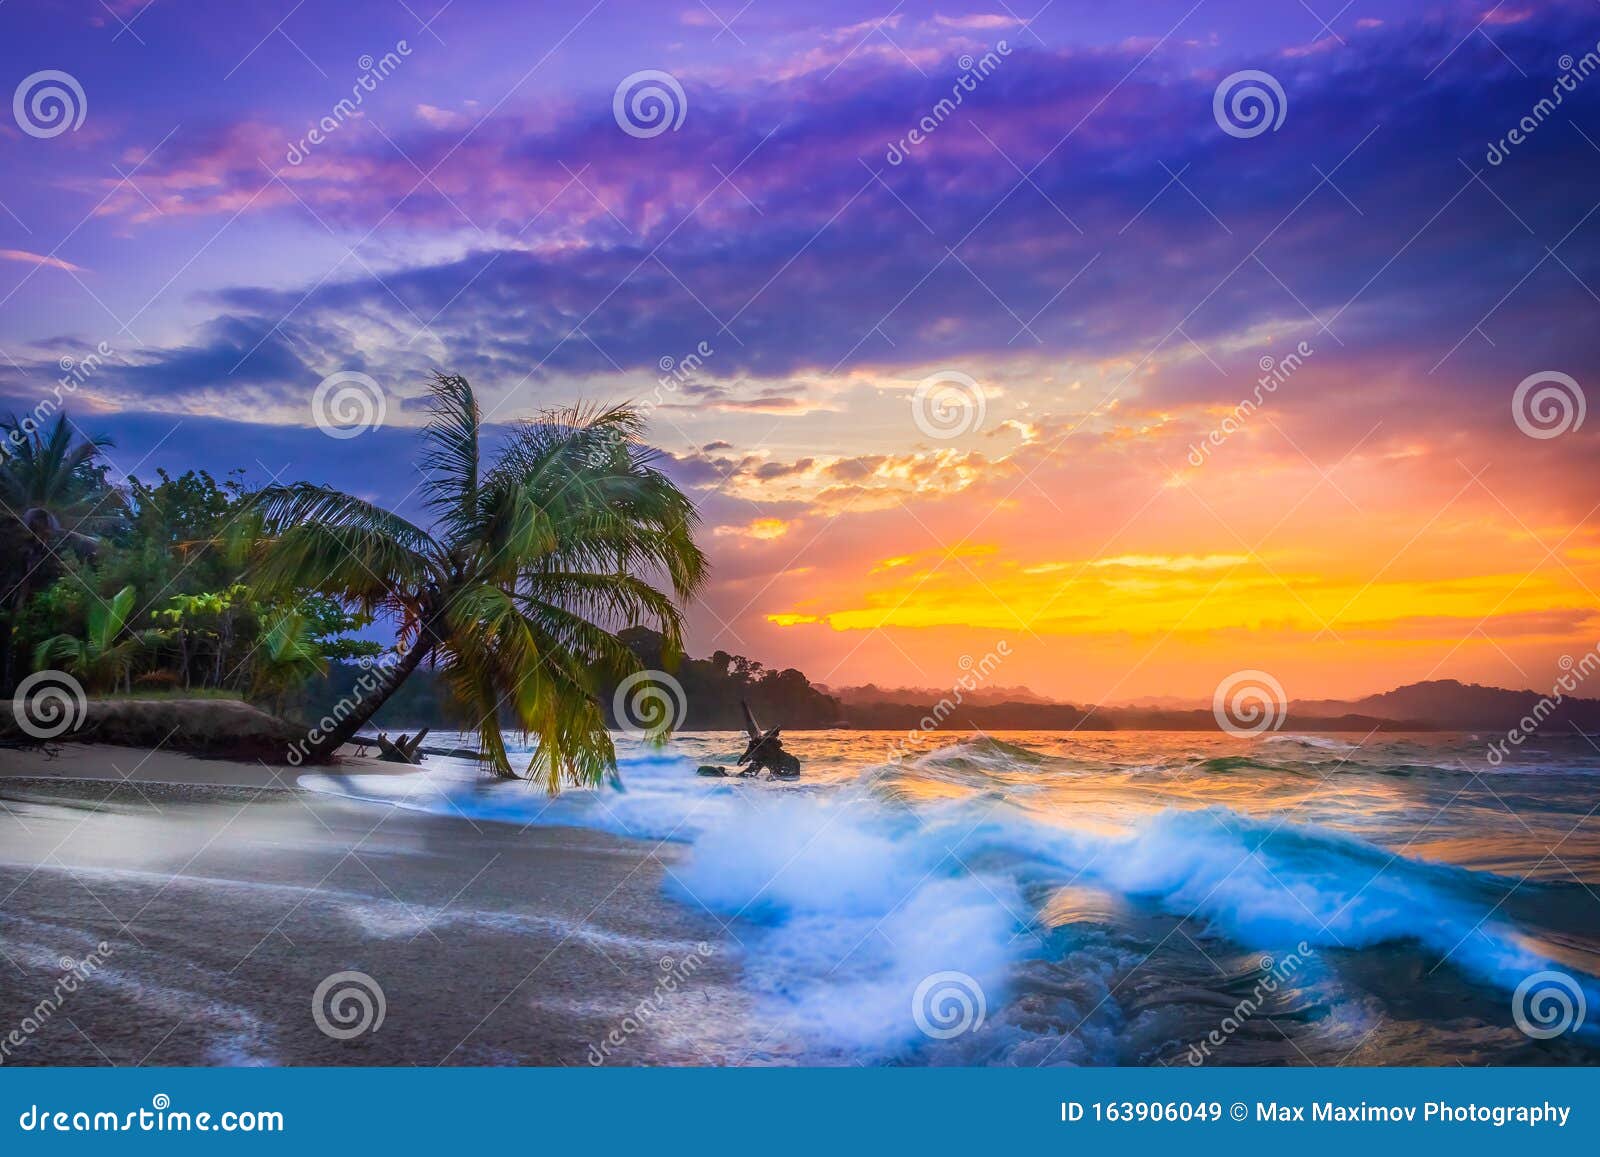 puerto viejo, costa rica - caribbean sunset over the beach outside puerto viejo de talamanca